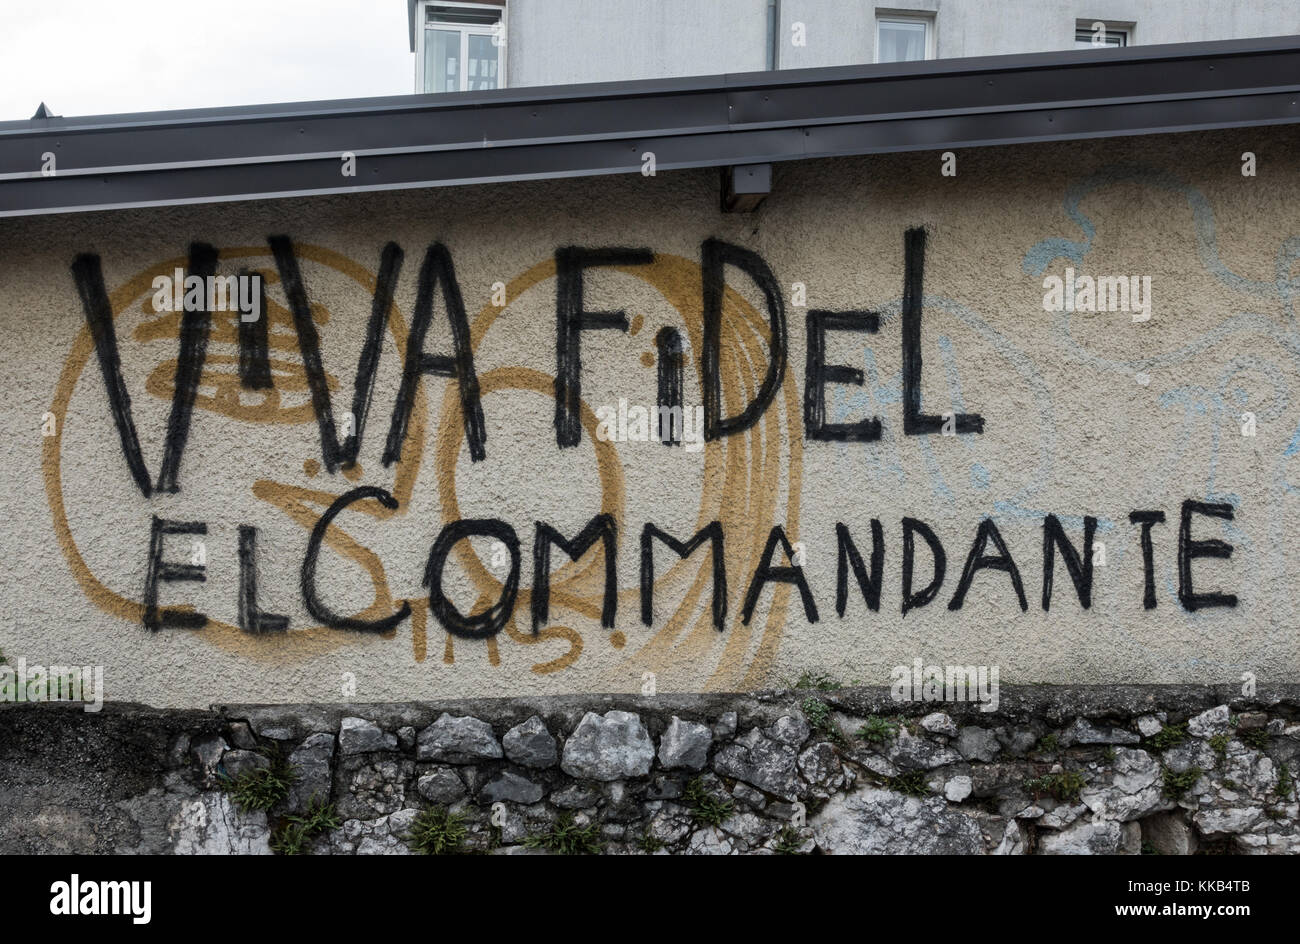 Viva Fidel El Commandante graffiti Stock Photo